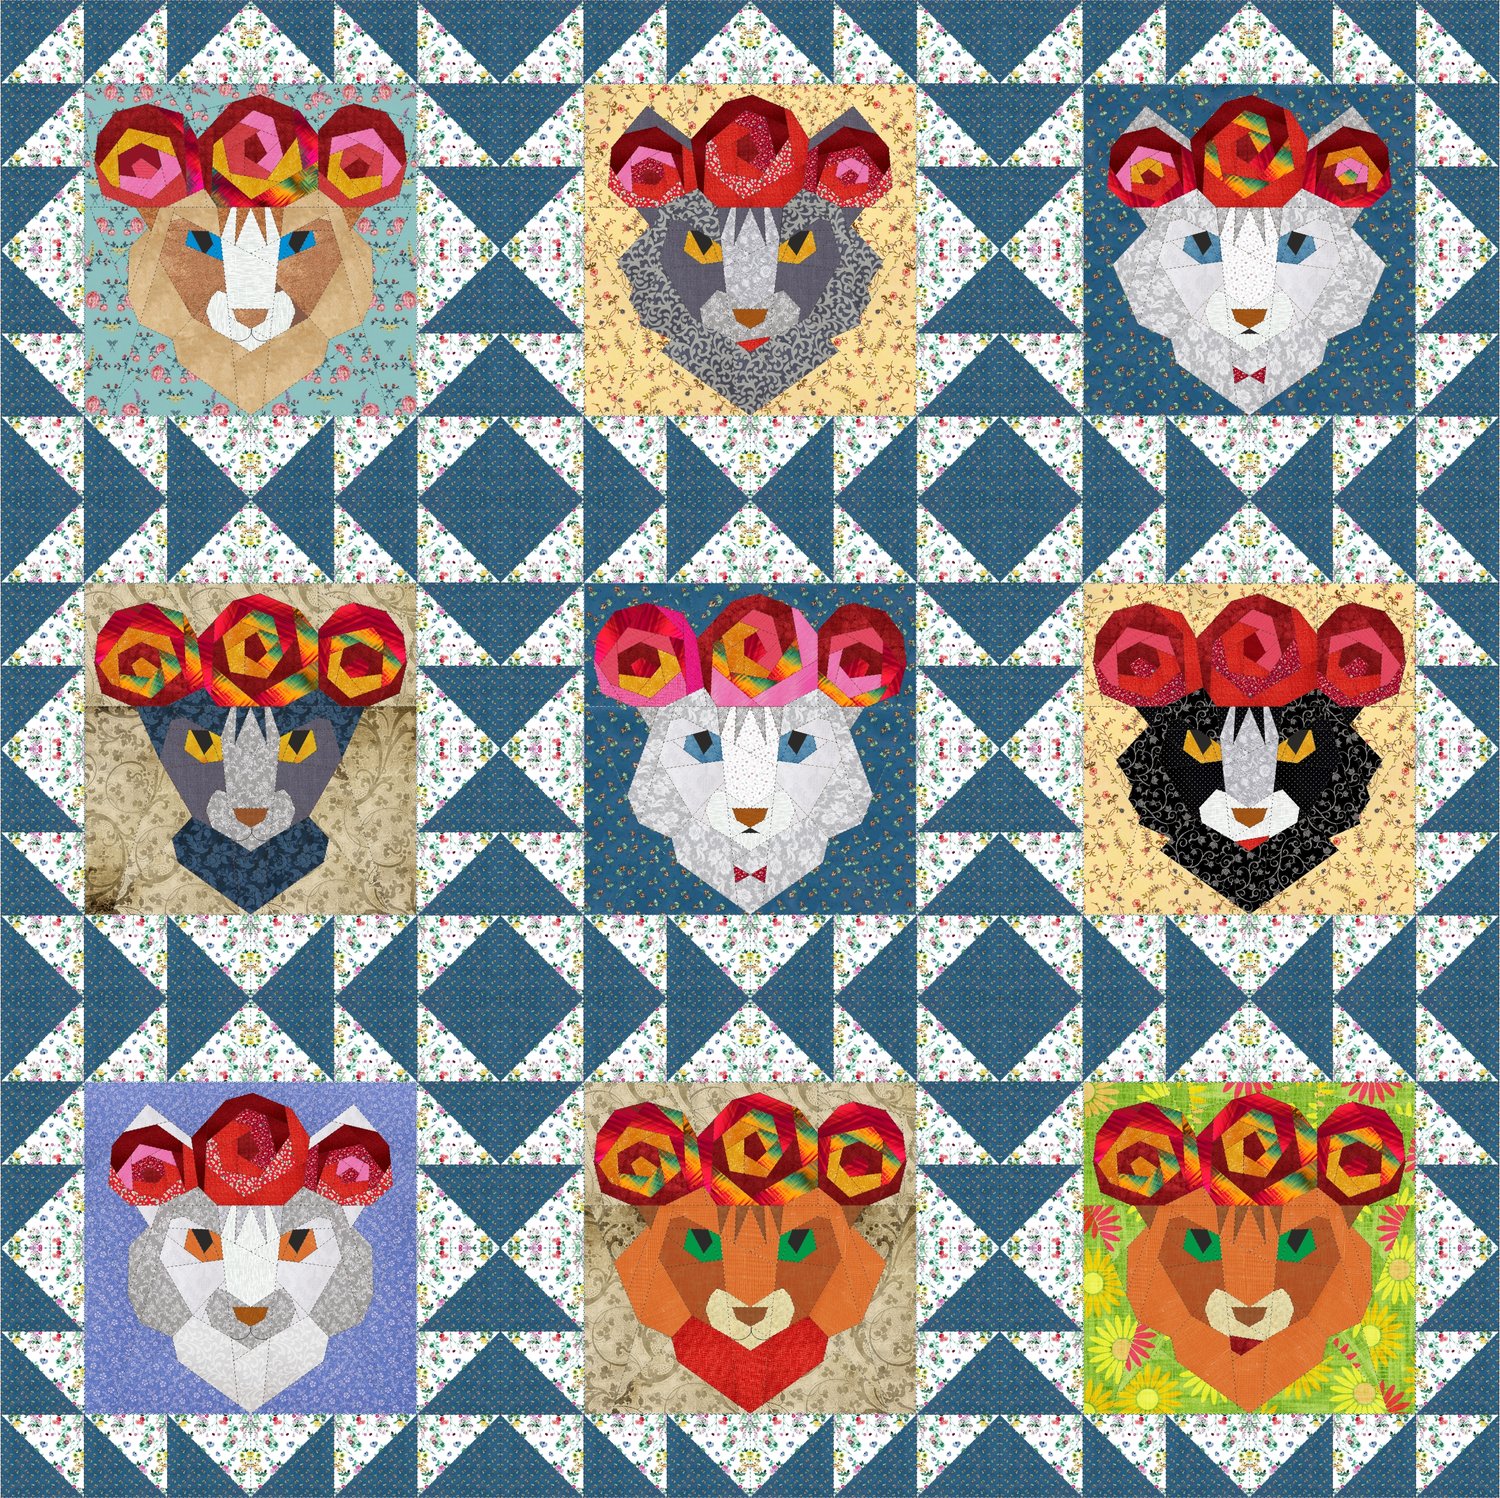 Cat heart Quilt Block PDF Pattern. Paper Piecing